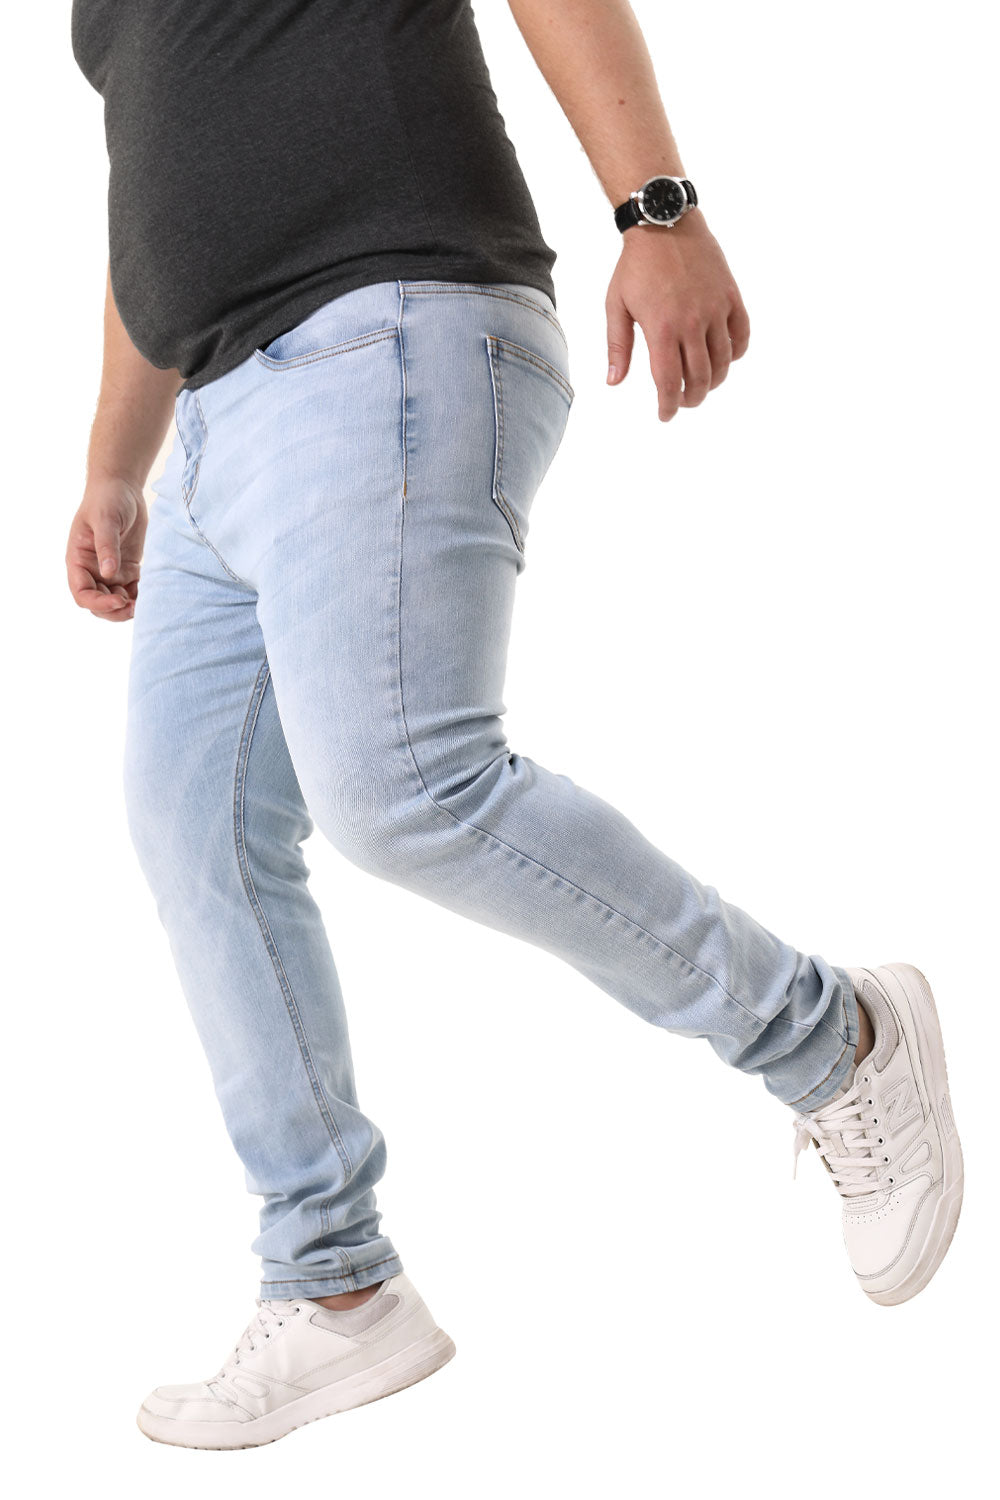 Men's blue fashion jeans(B&T)